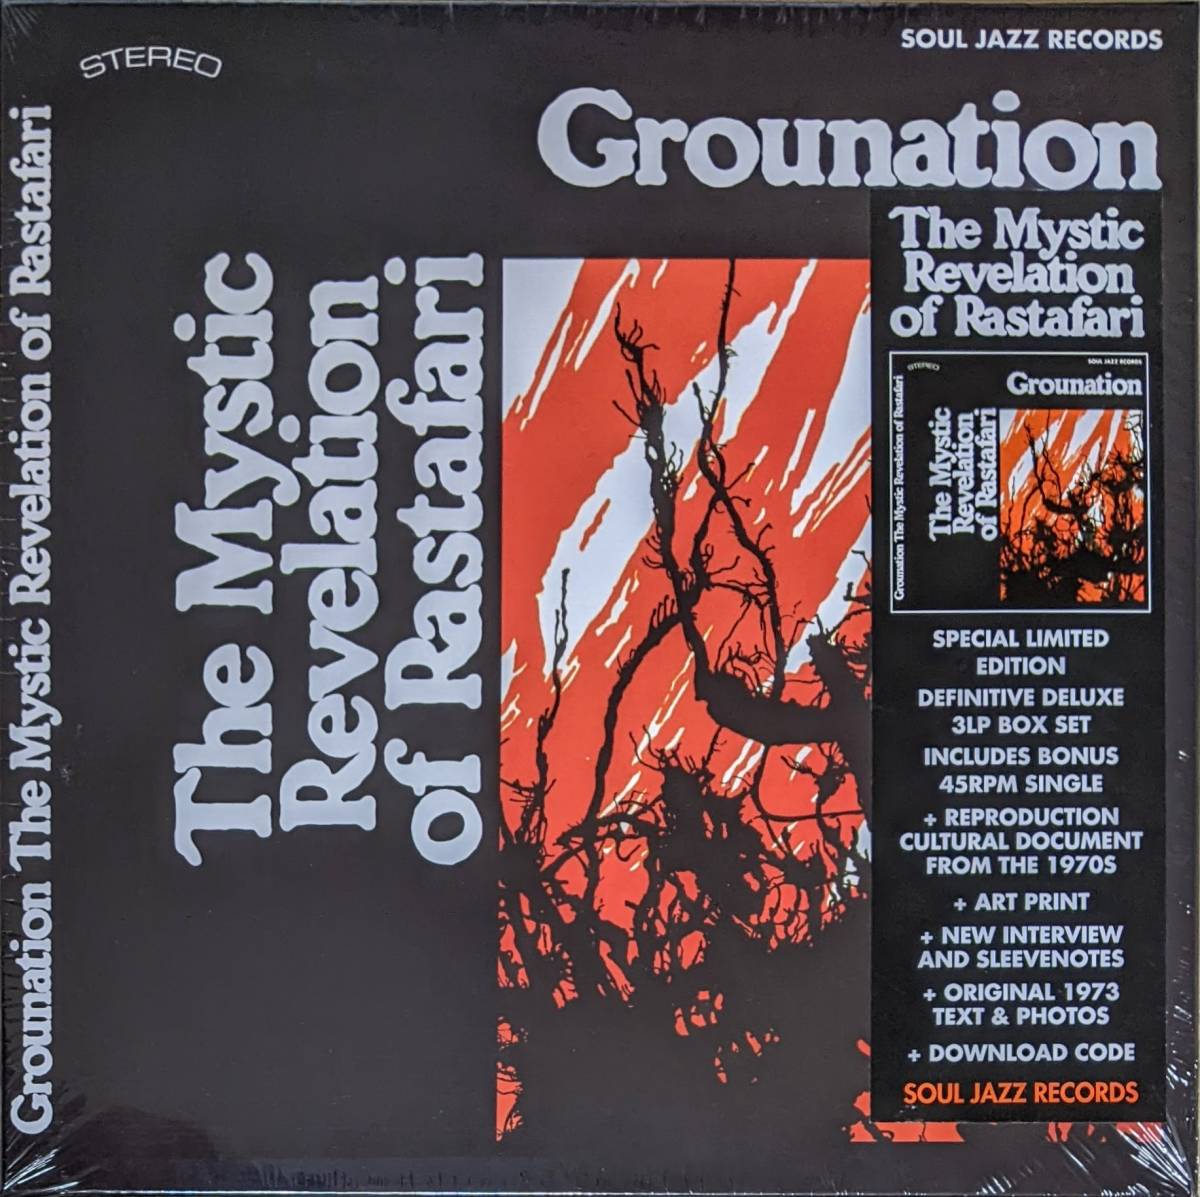 Count Ossie カウント・オジー & The Mystic Revelation Of Rastafari - Grounation 7インチ・シングル付限定再発三枚組アナログ・レコード